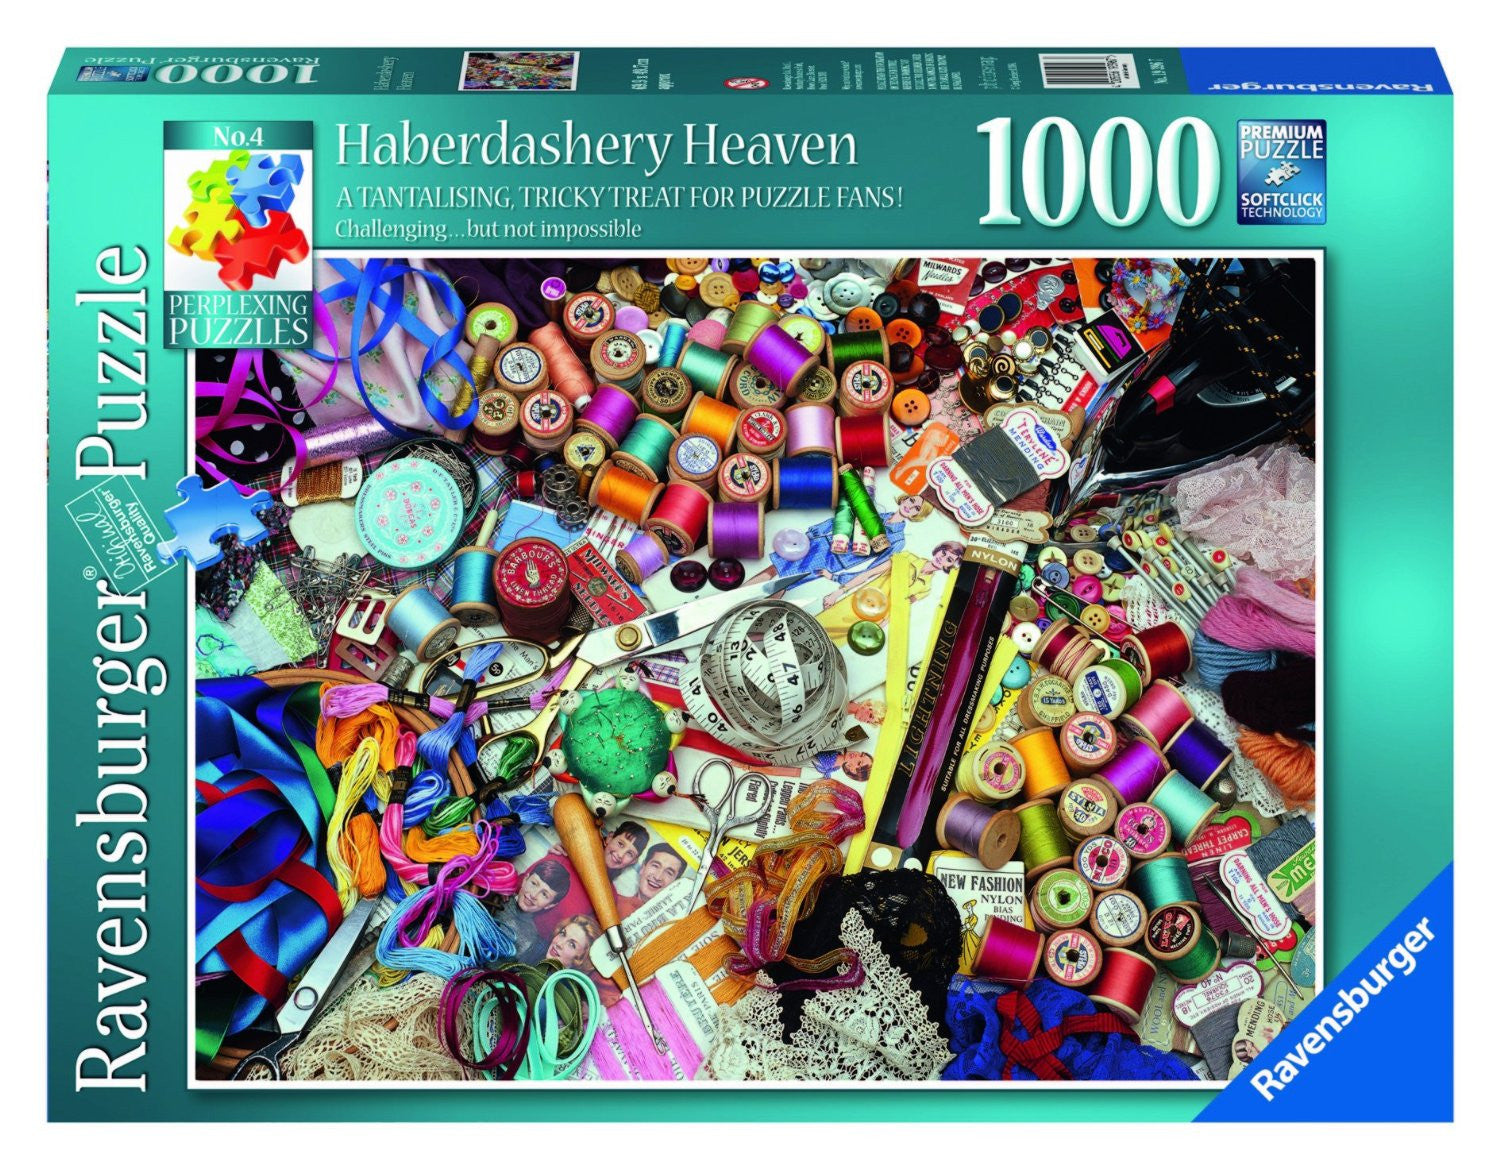 Ravensburger Adult Puzzles 1000 pc Puzzles - Haberdashery Heaven 19396